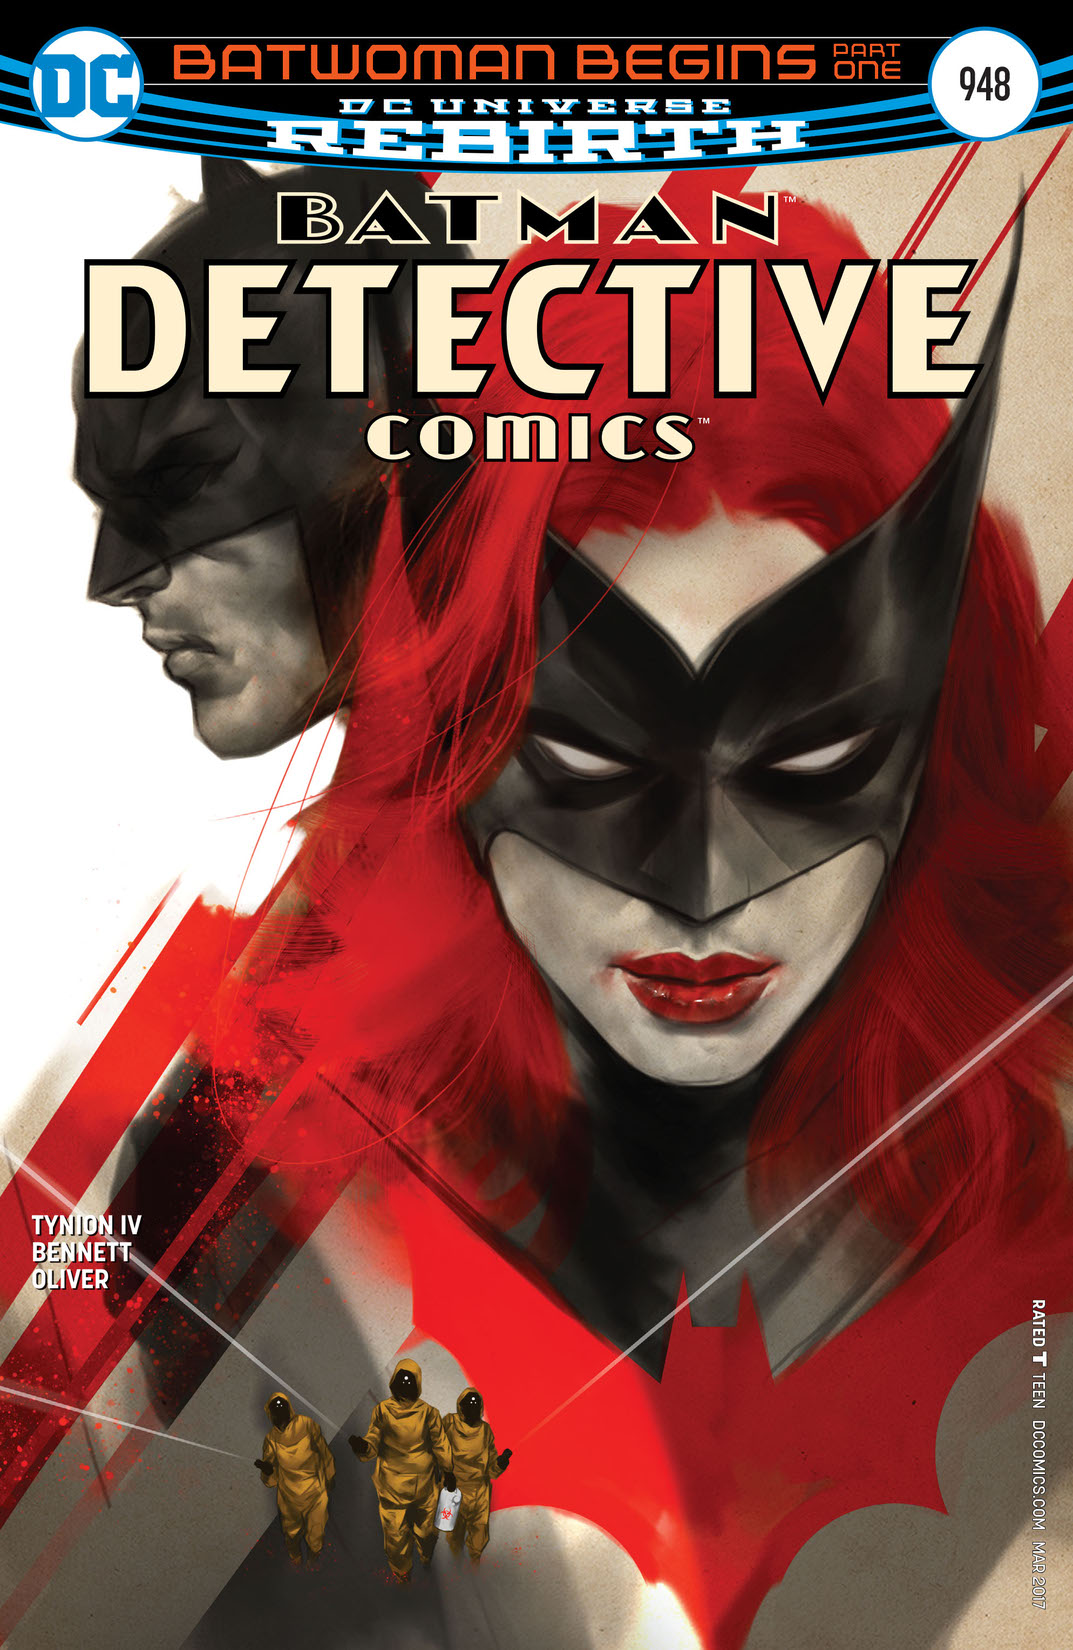 Detective Comics (2016-) #948 preview images